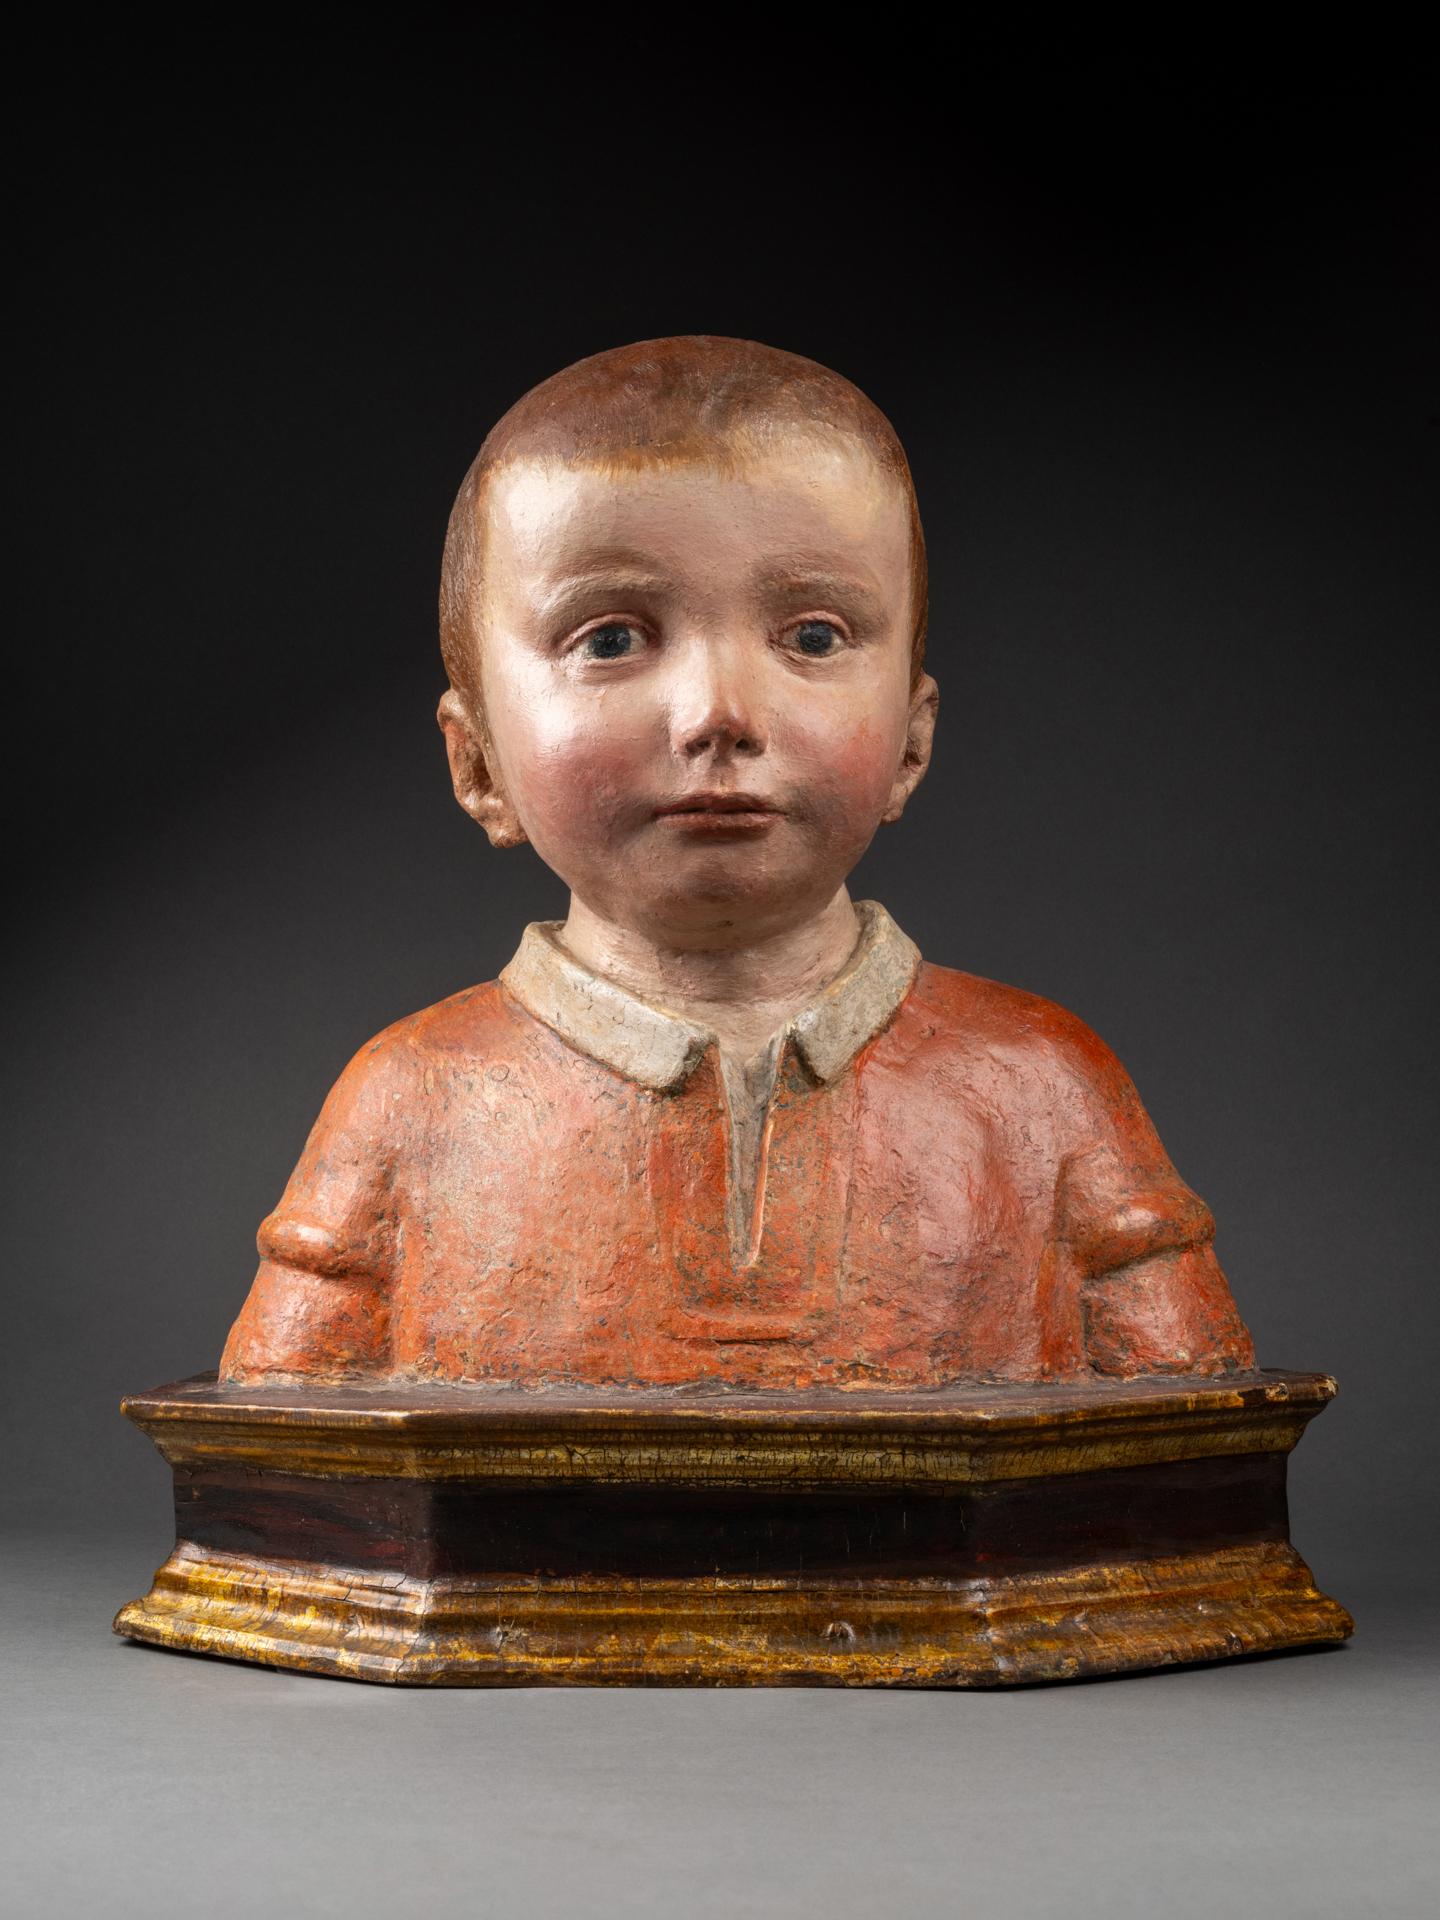 Polychromed Antonio Rossellino (Settignano 1427 - Firenze 1479) - Bust of a young boy For Sale